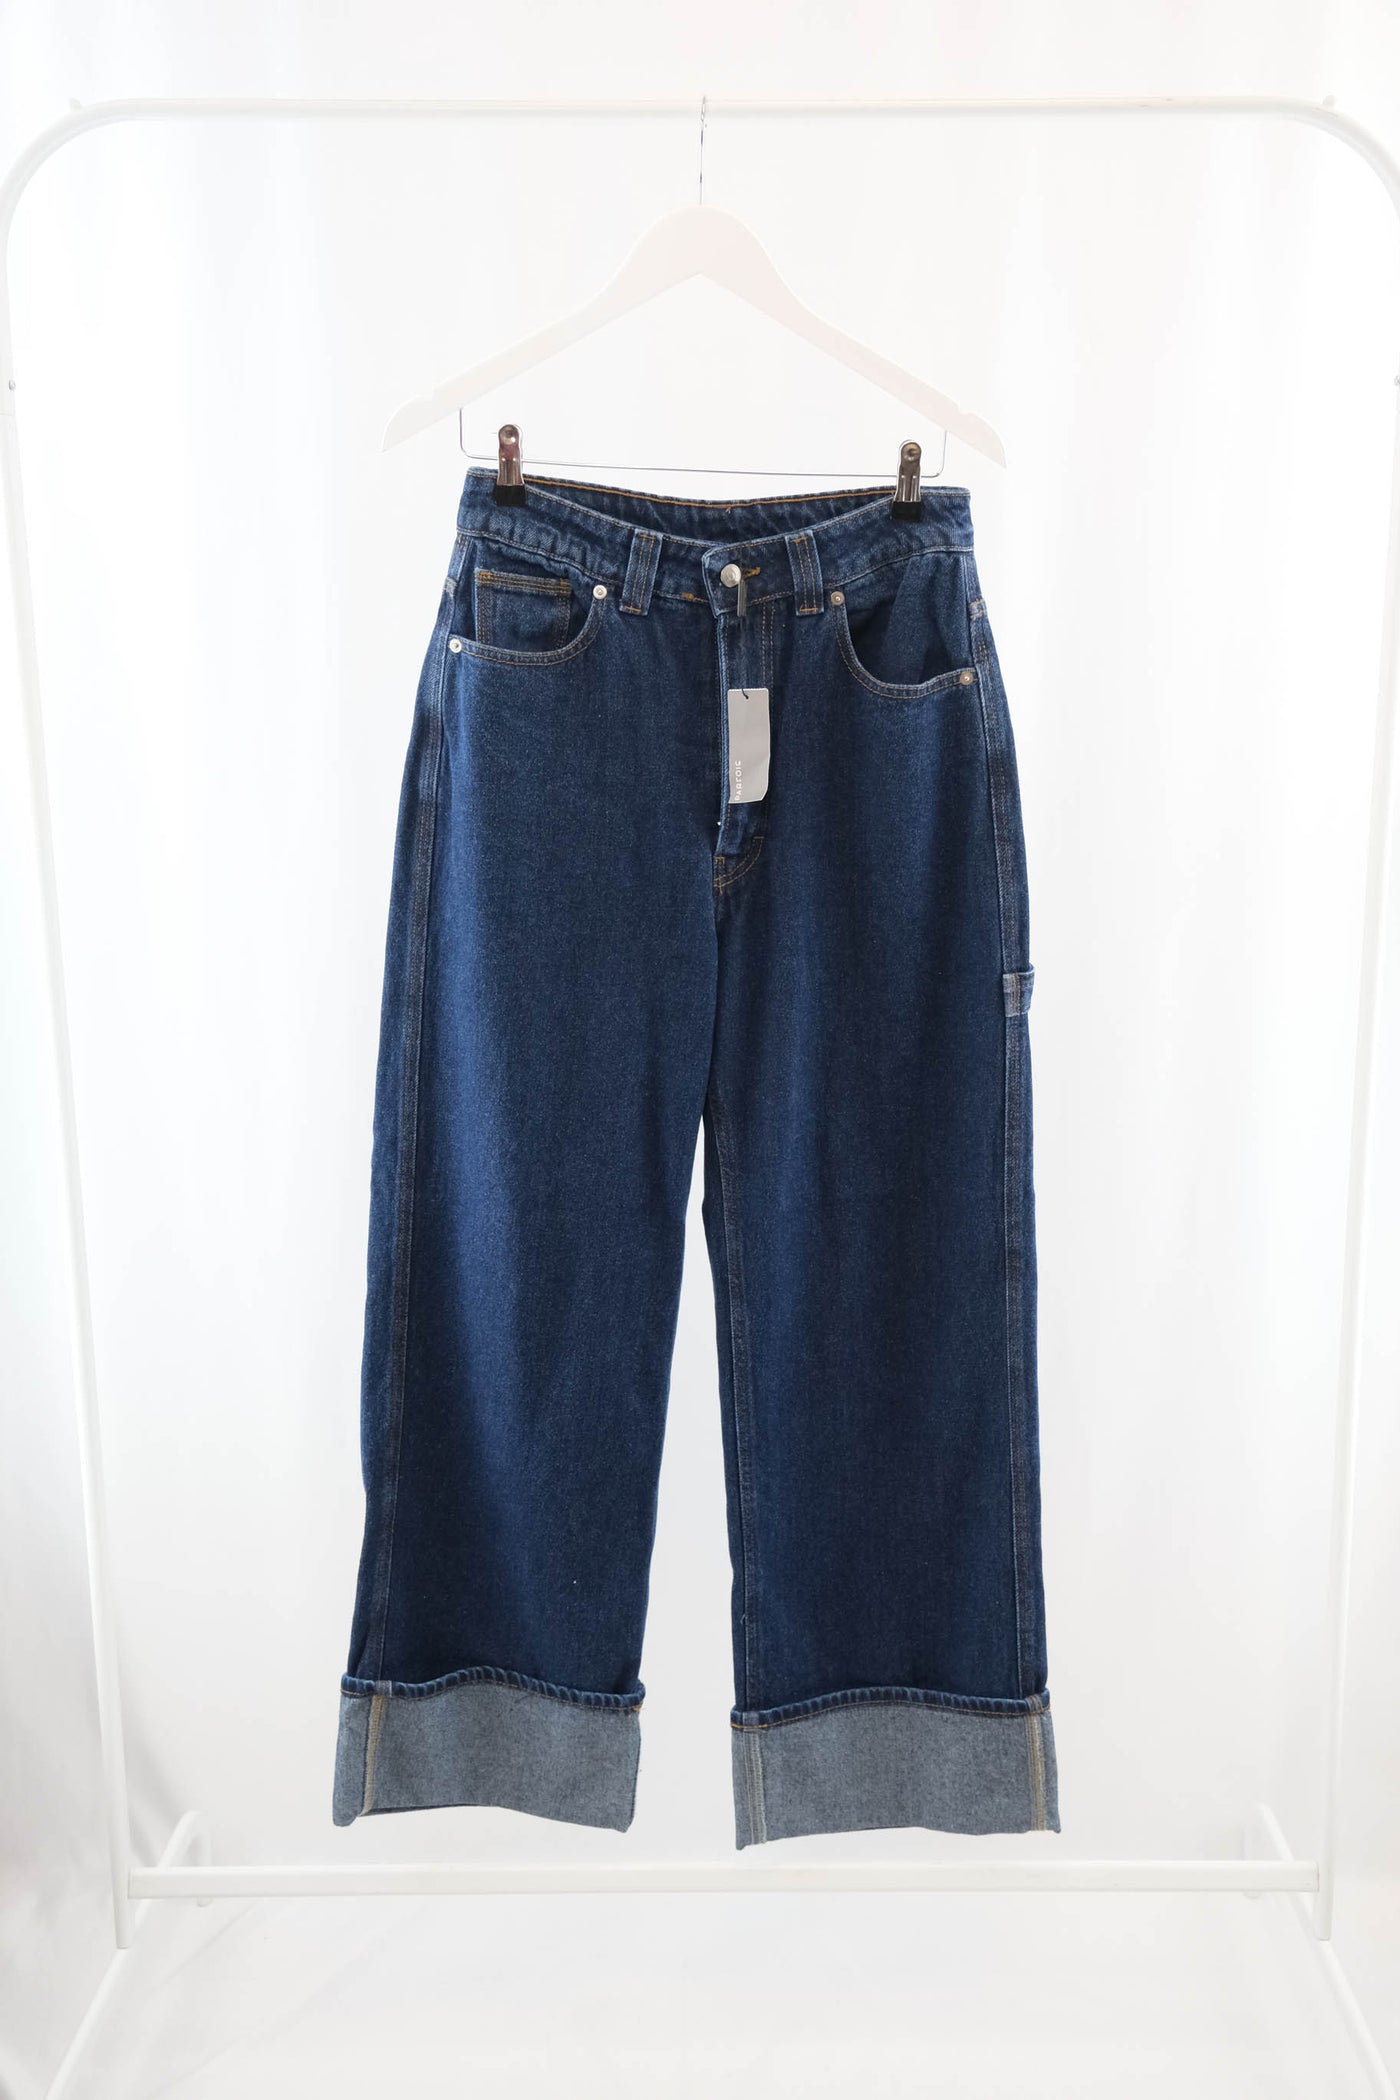 jeans azul marino (NUEVO)